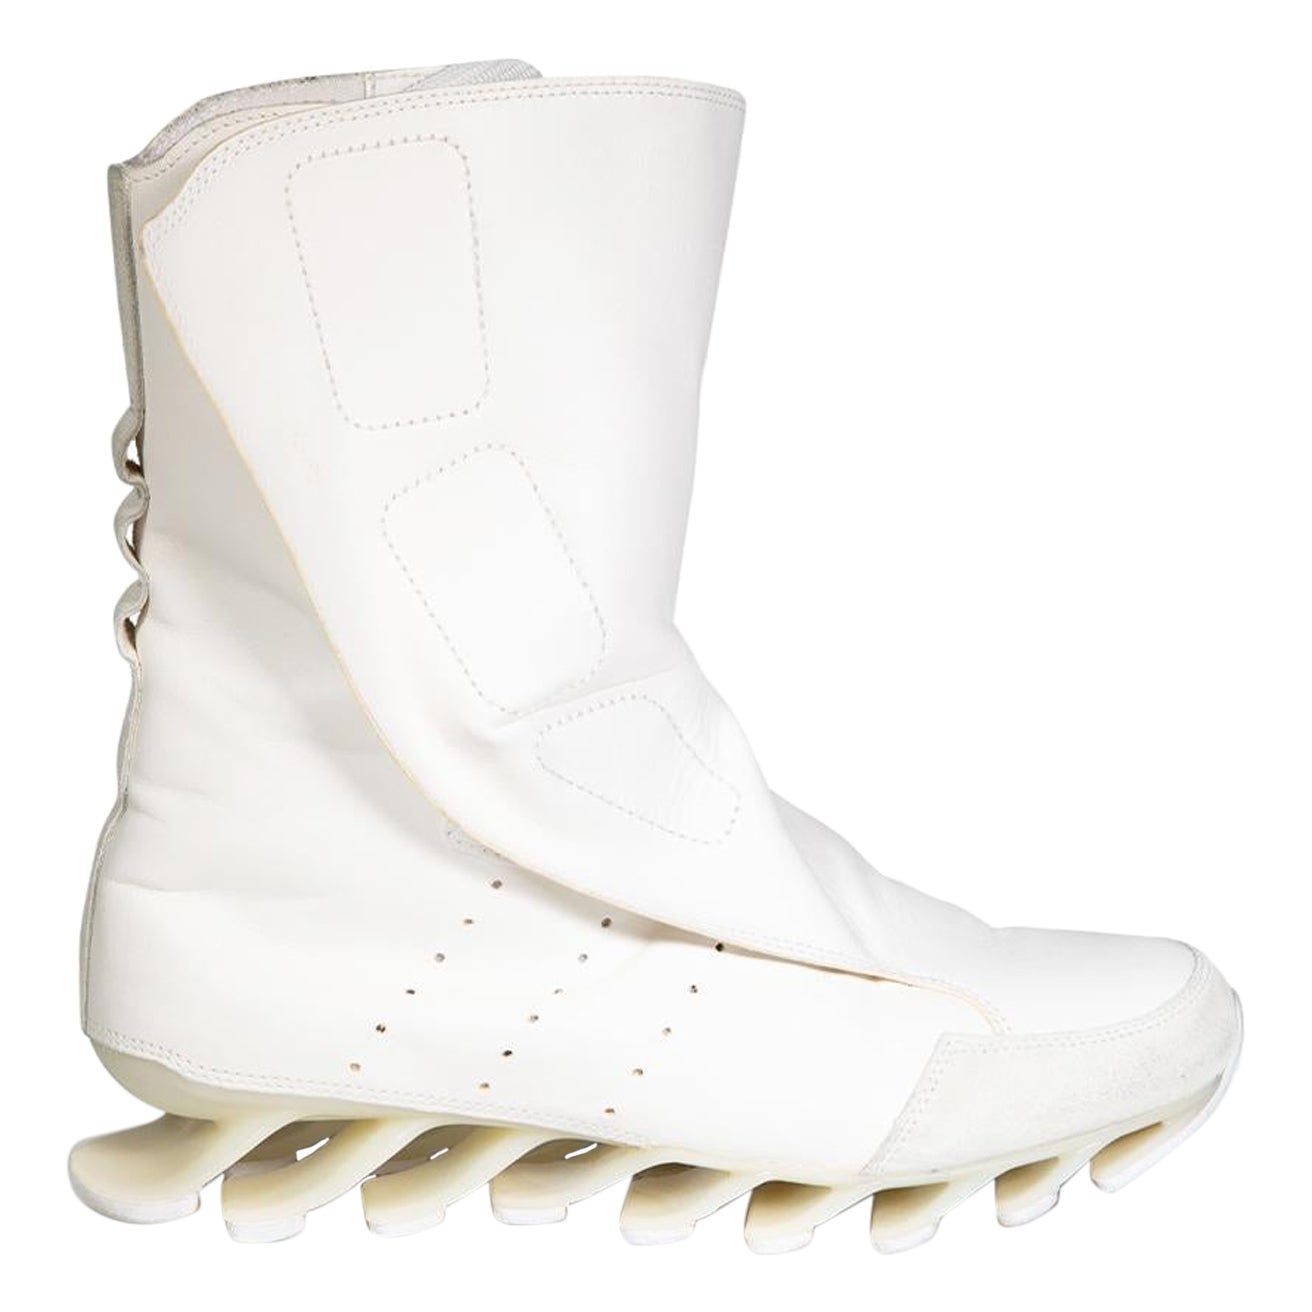 Rick Owens Adidas x Rick Owens - Bottes Springblade en cuir blanc, taille UK 6 en vente